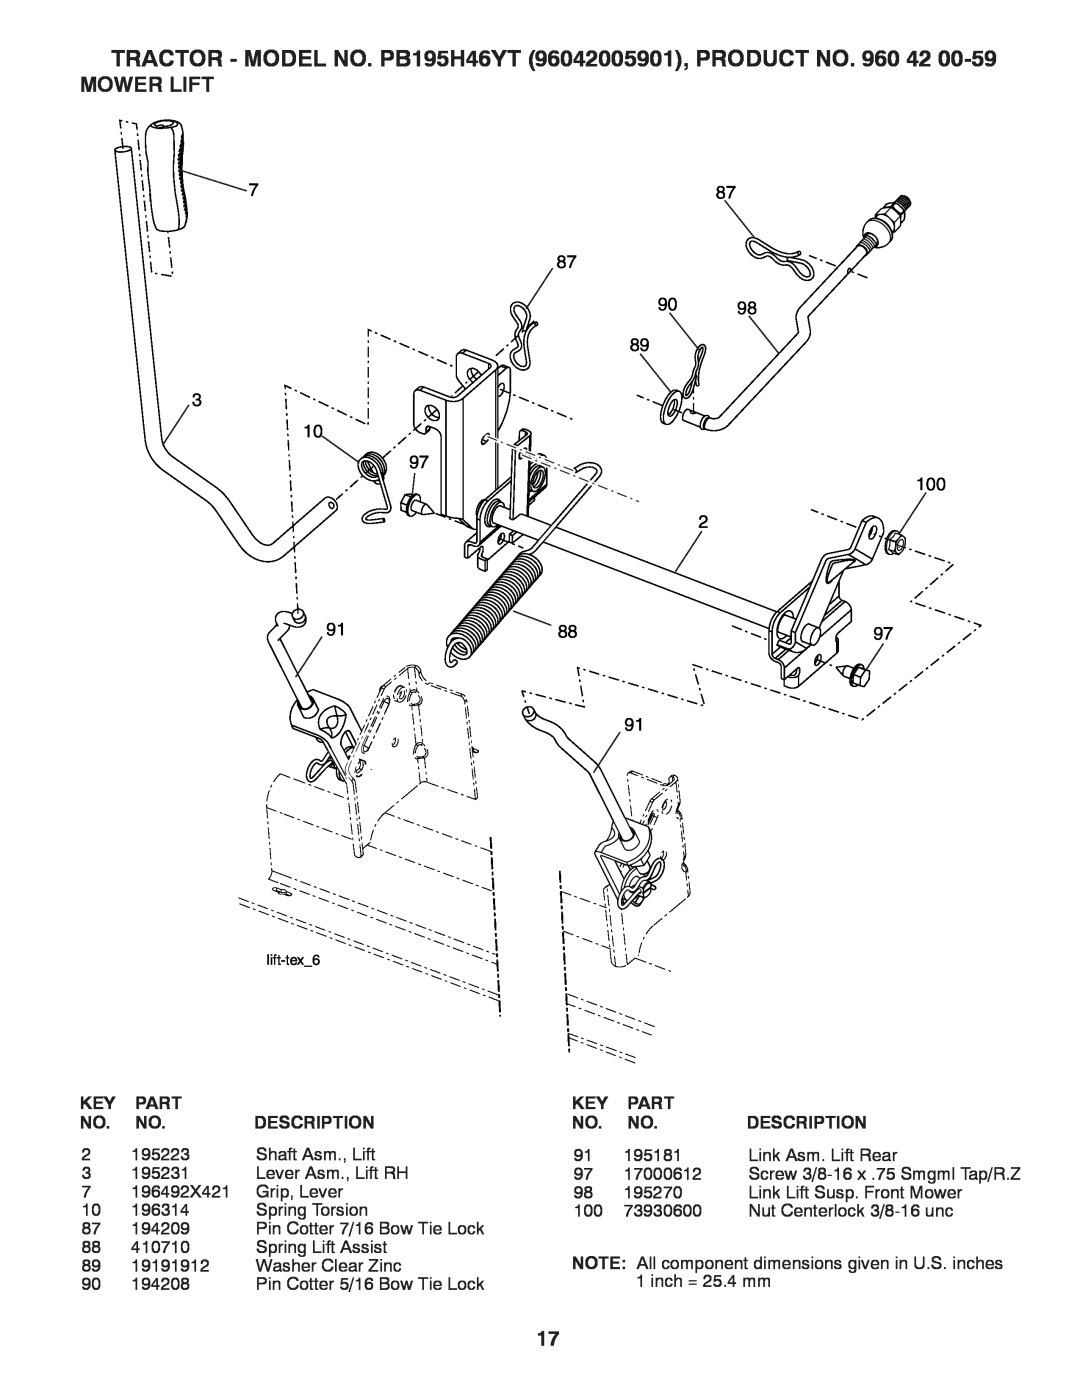 Poulan manual Mower Lift, TRACTOR - MODEL NO. PB195H46YT 96042005901, PRODUCT NO. 960, Part, Description 